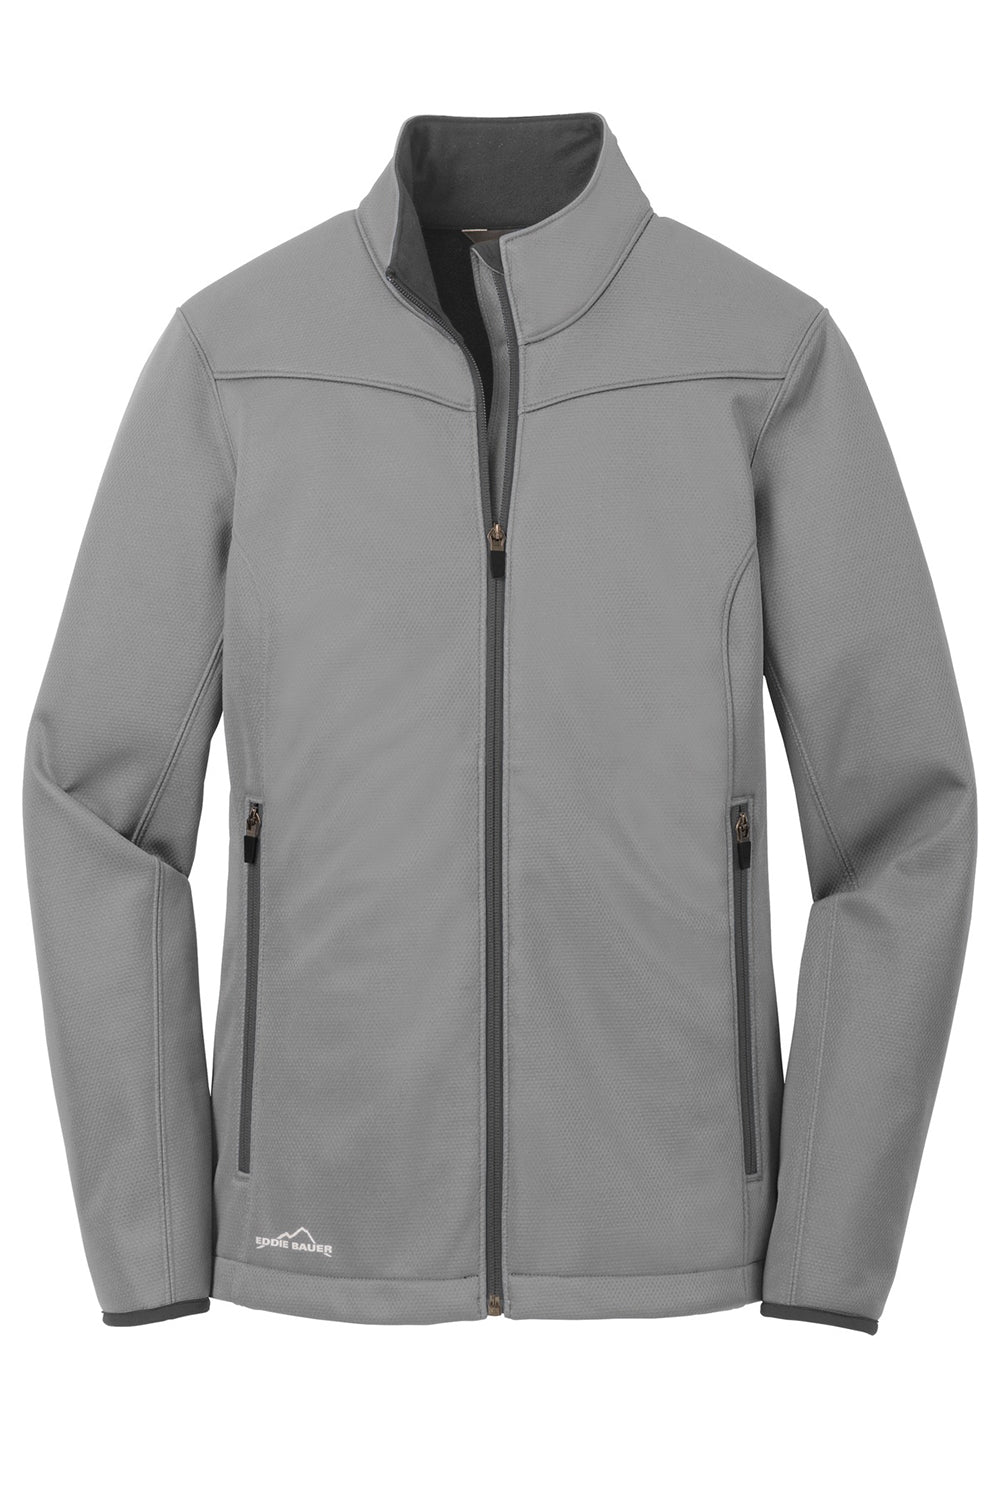 Eddie Bauer EB539 Womens Waterproof Full Zip Jacket Chrome Grey Flat Front